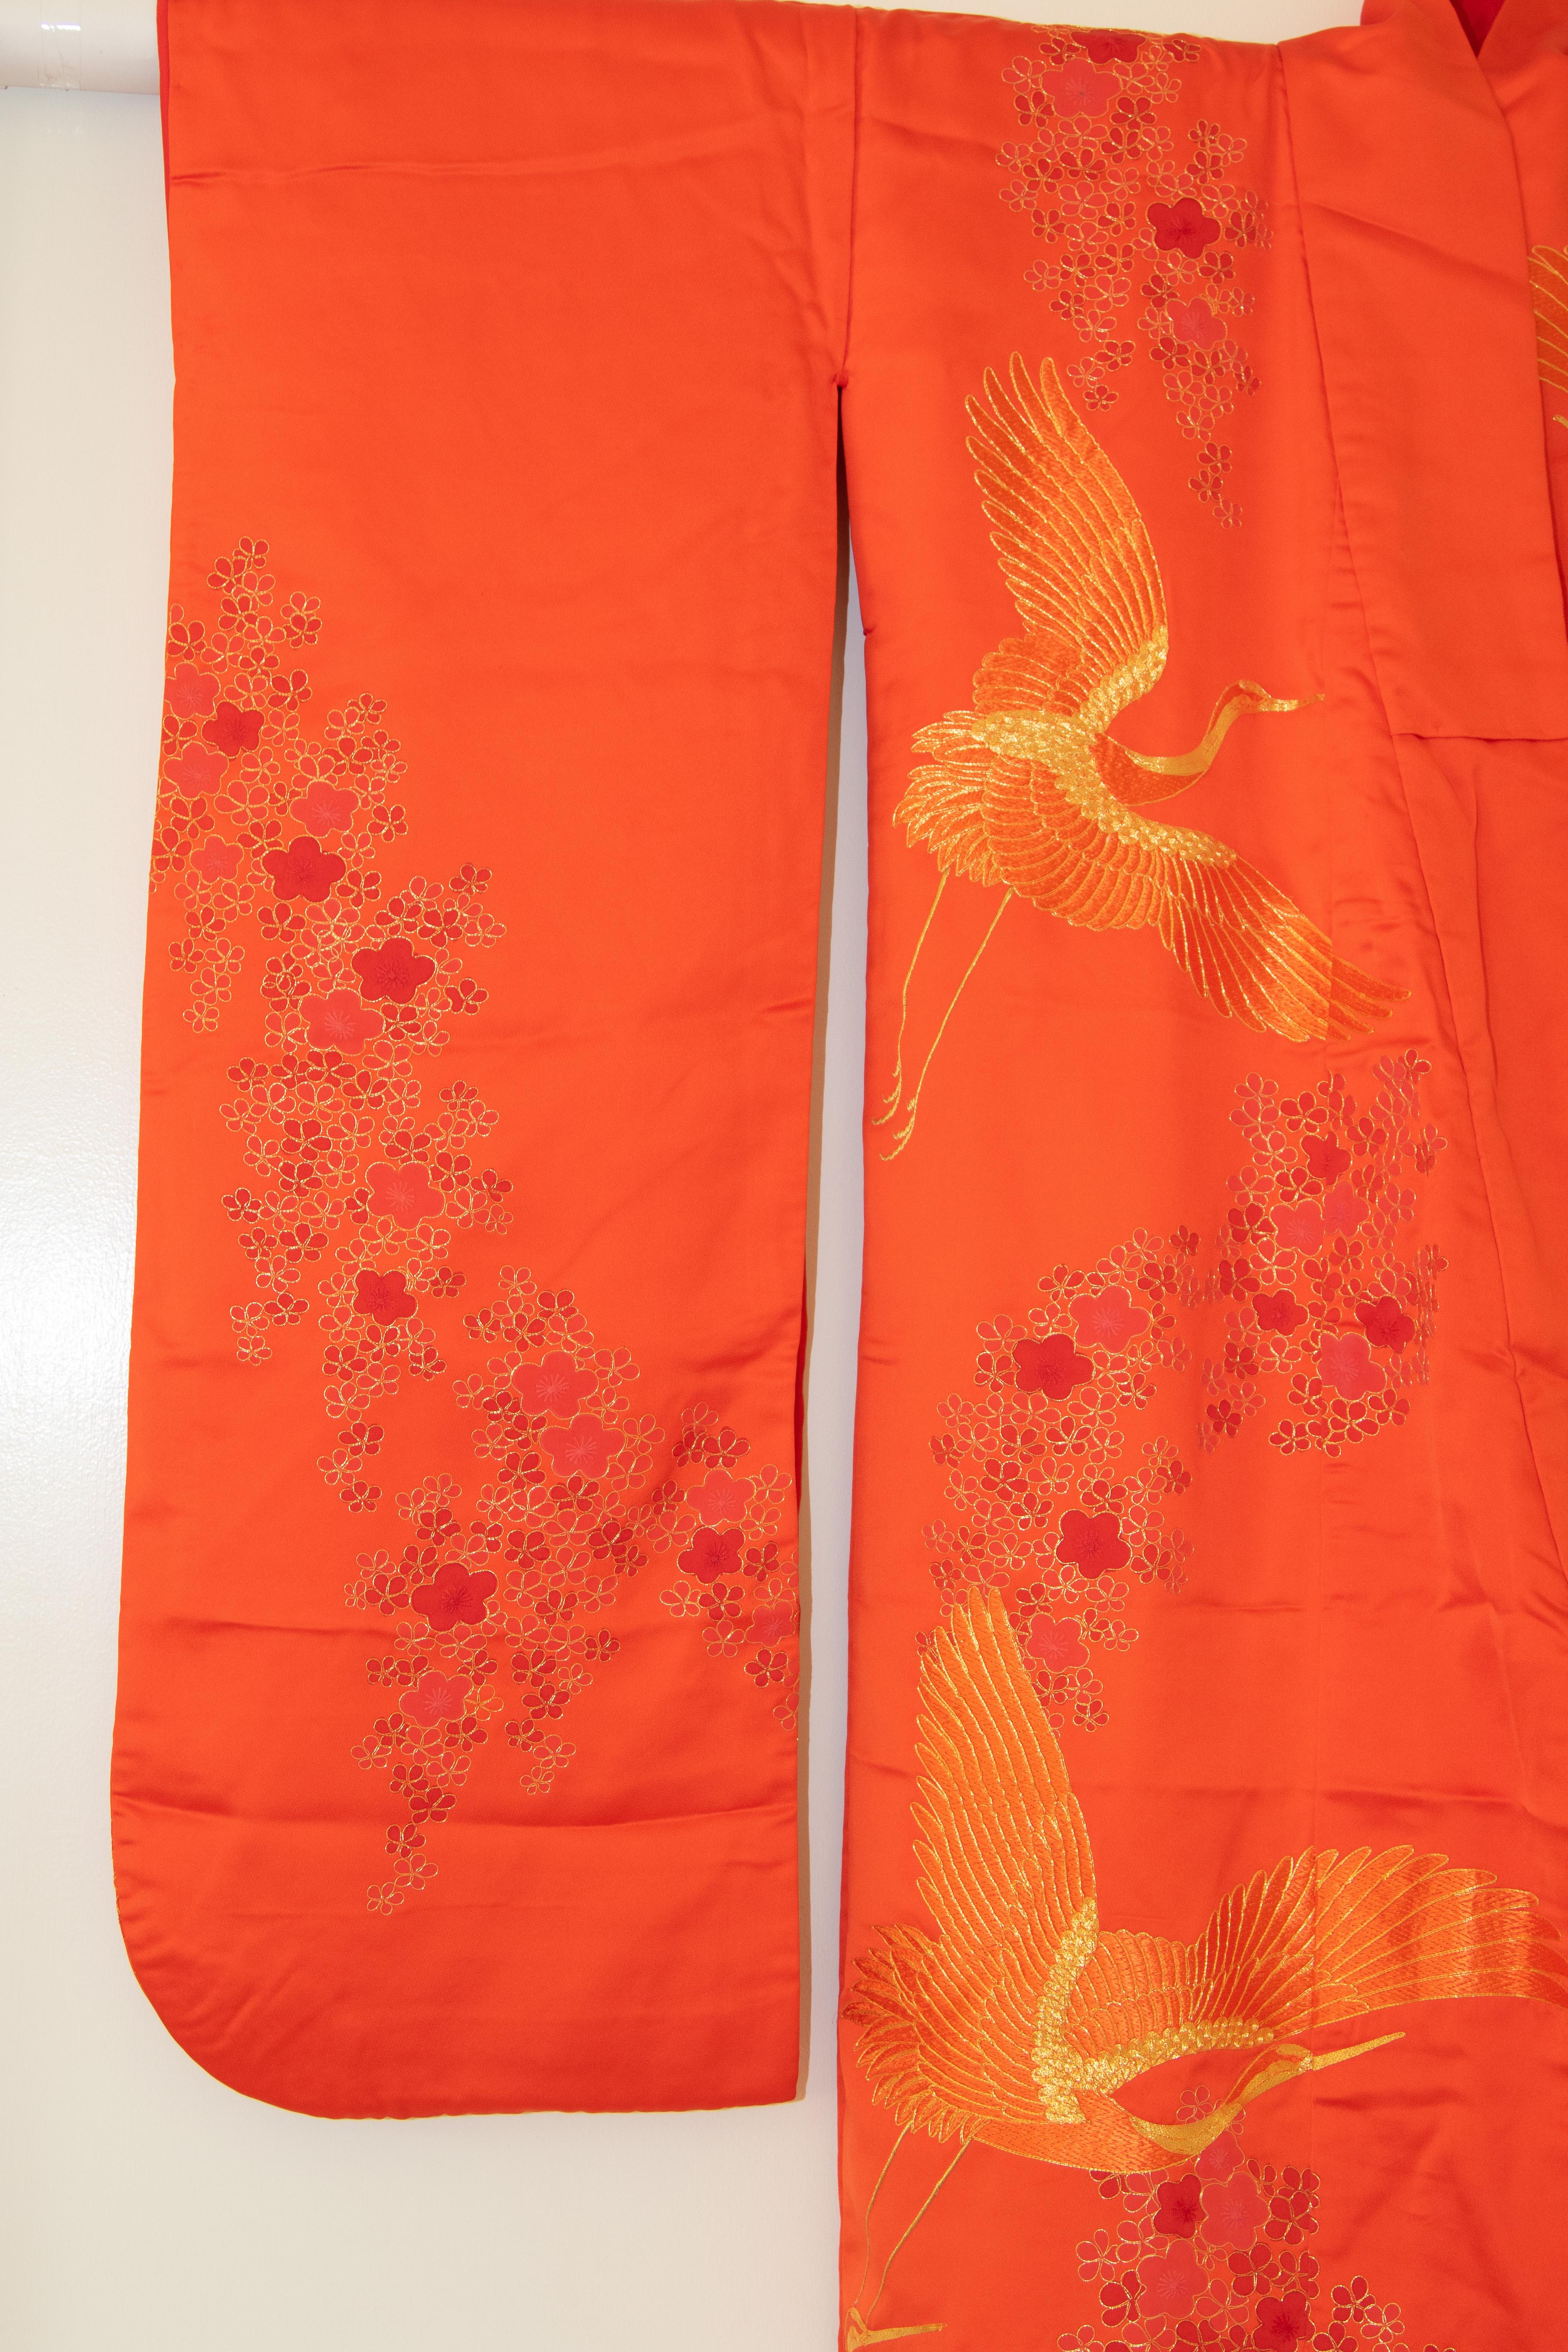 Vintage Kimono Red Silk Brocade Japanese Wedding Dress For Sale 10